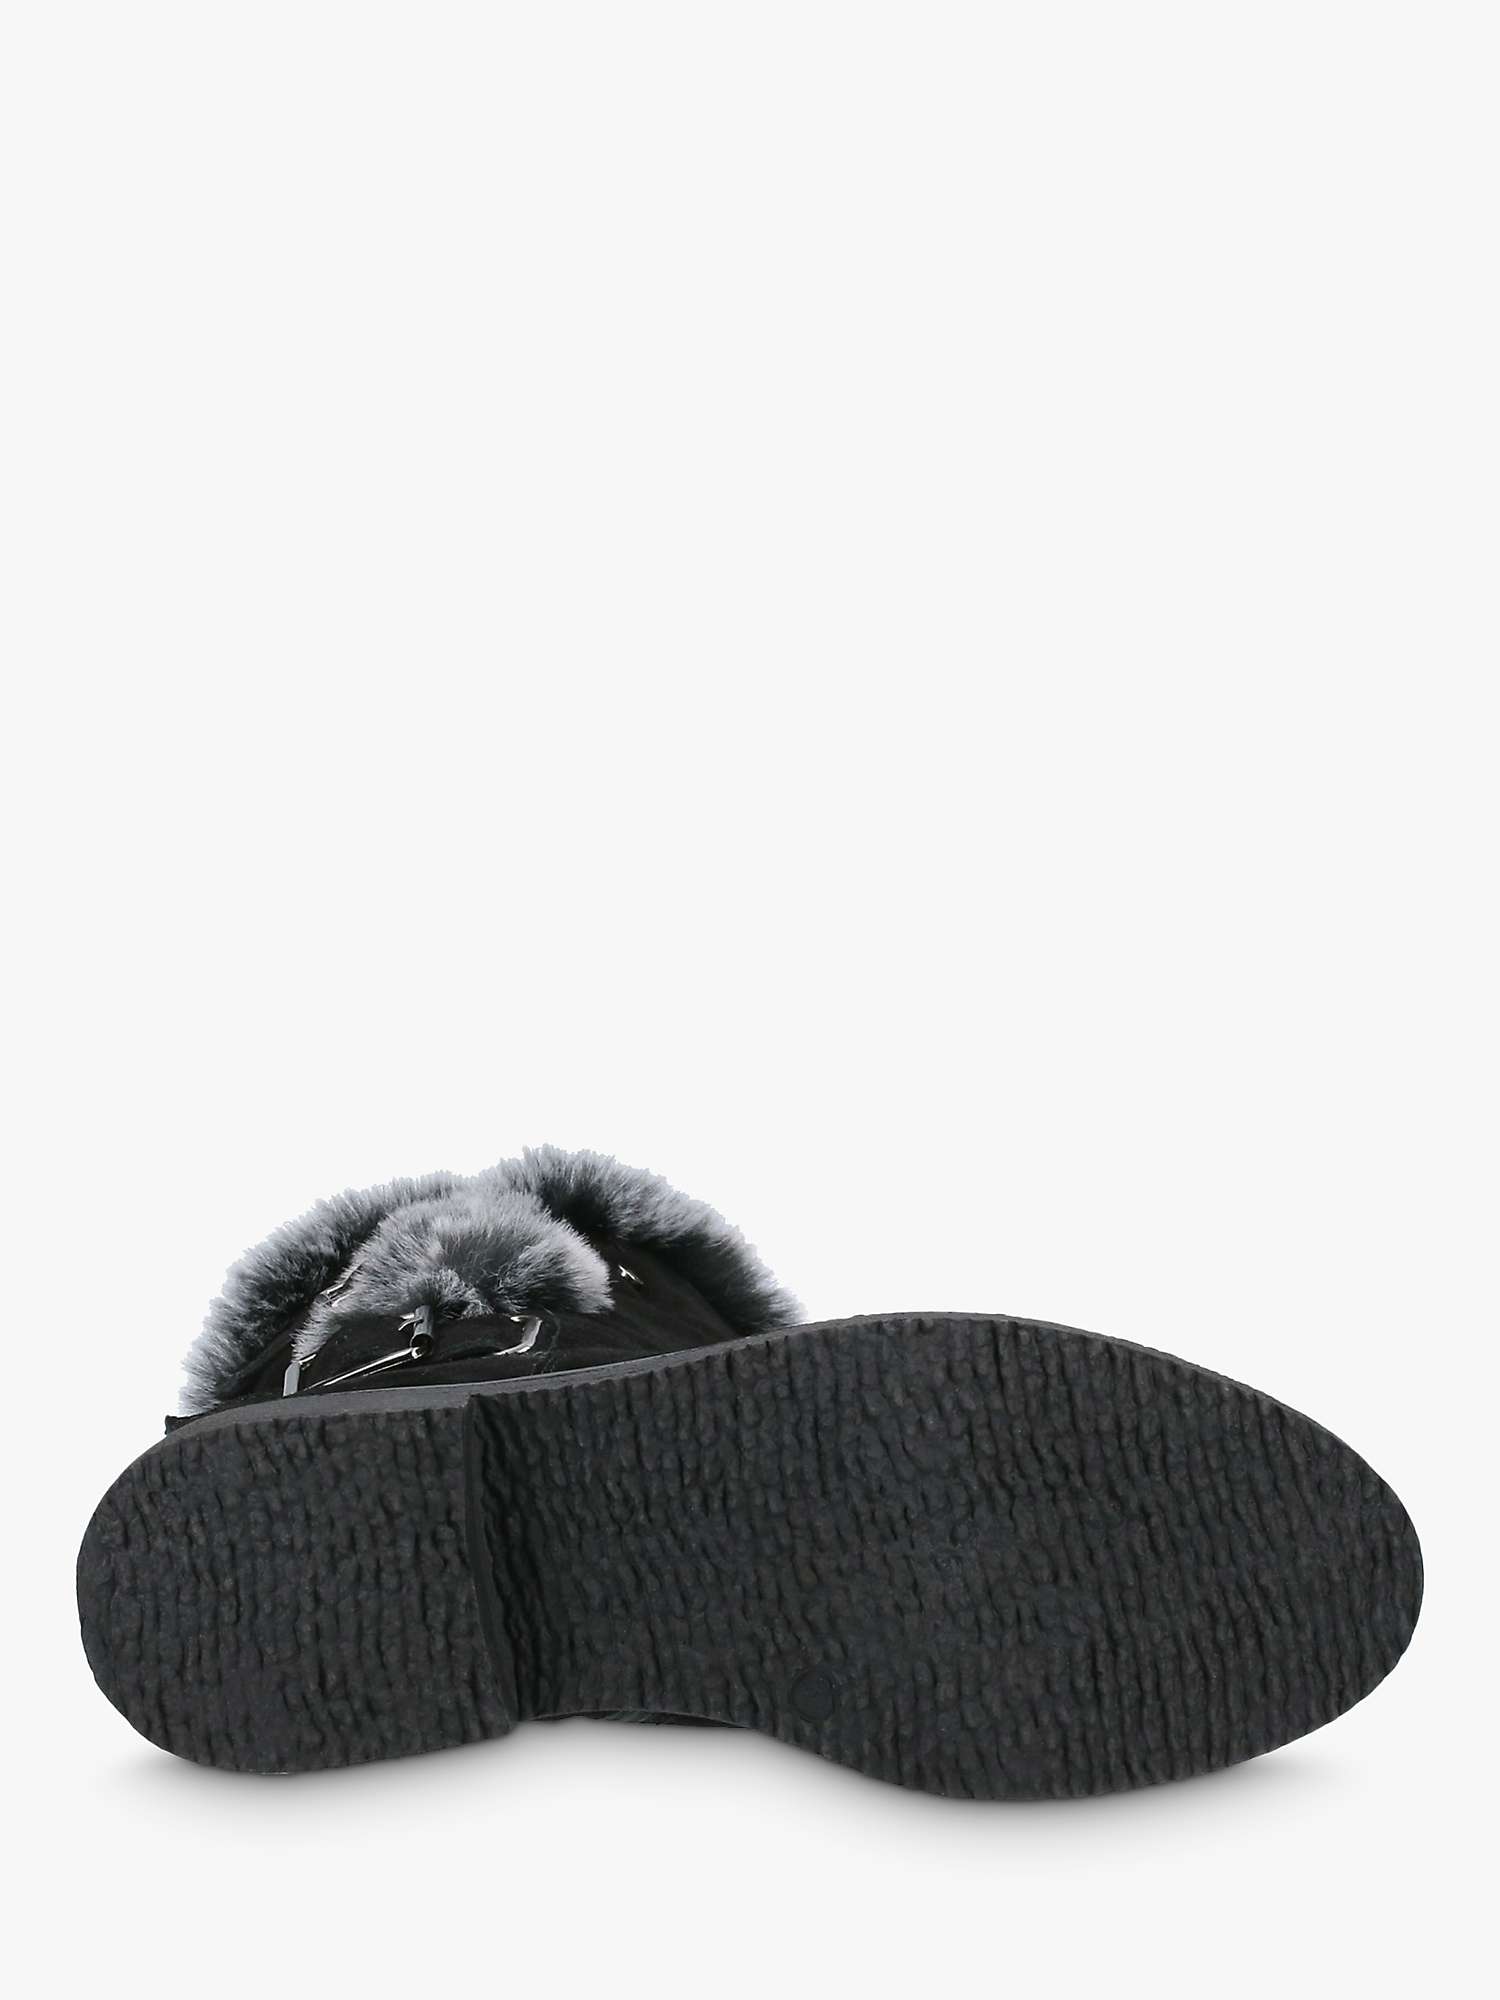 Buy Hush Puppies Megan Suede Faux Fur Buckle Detail Calf Boots Online at johnlewis.com